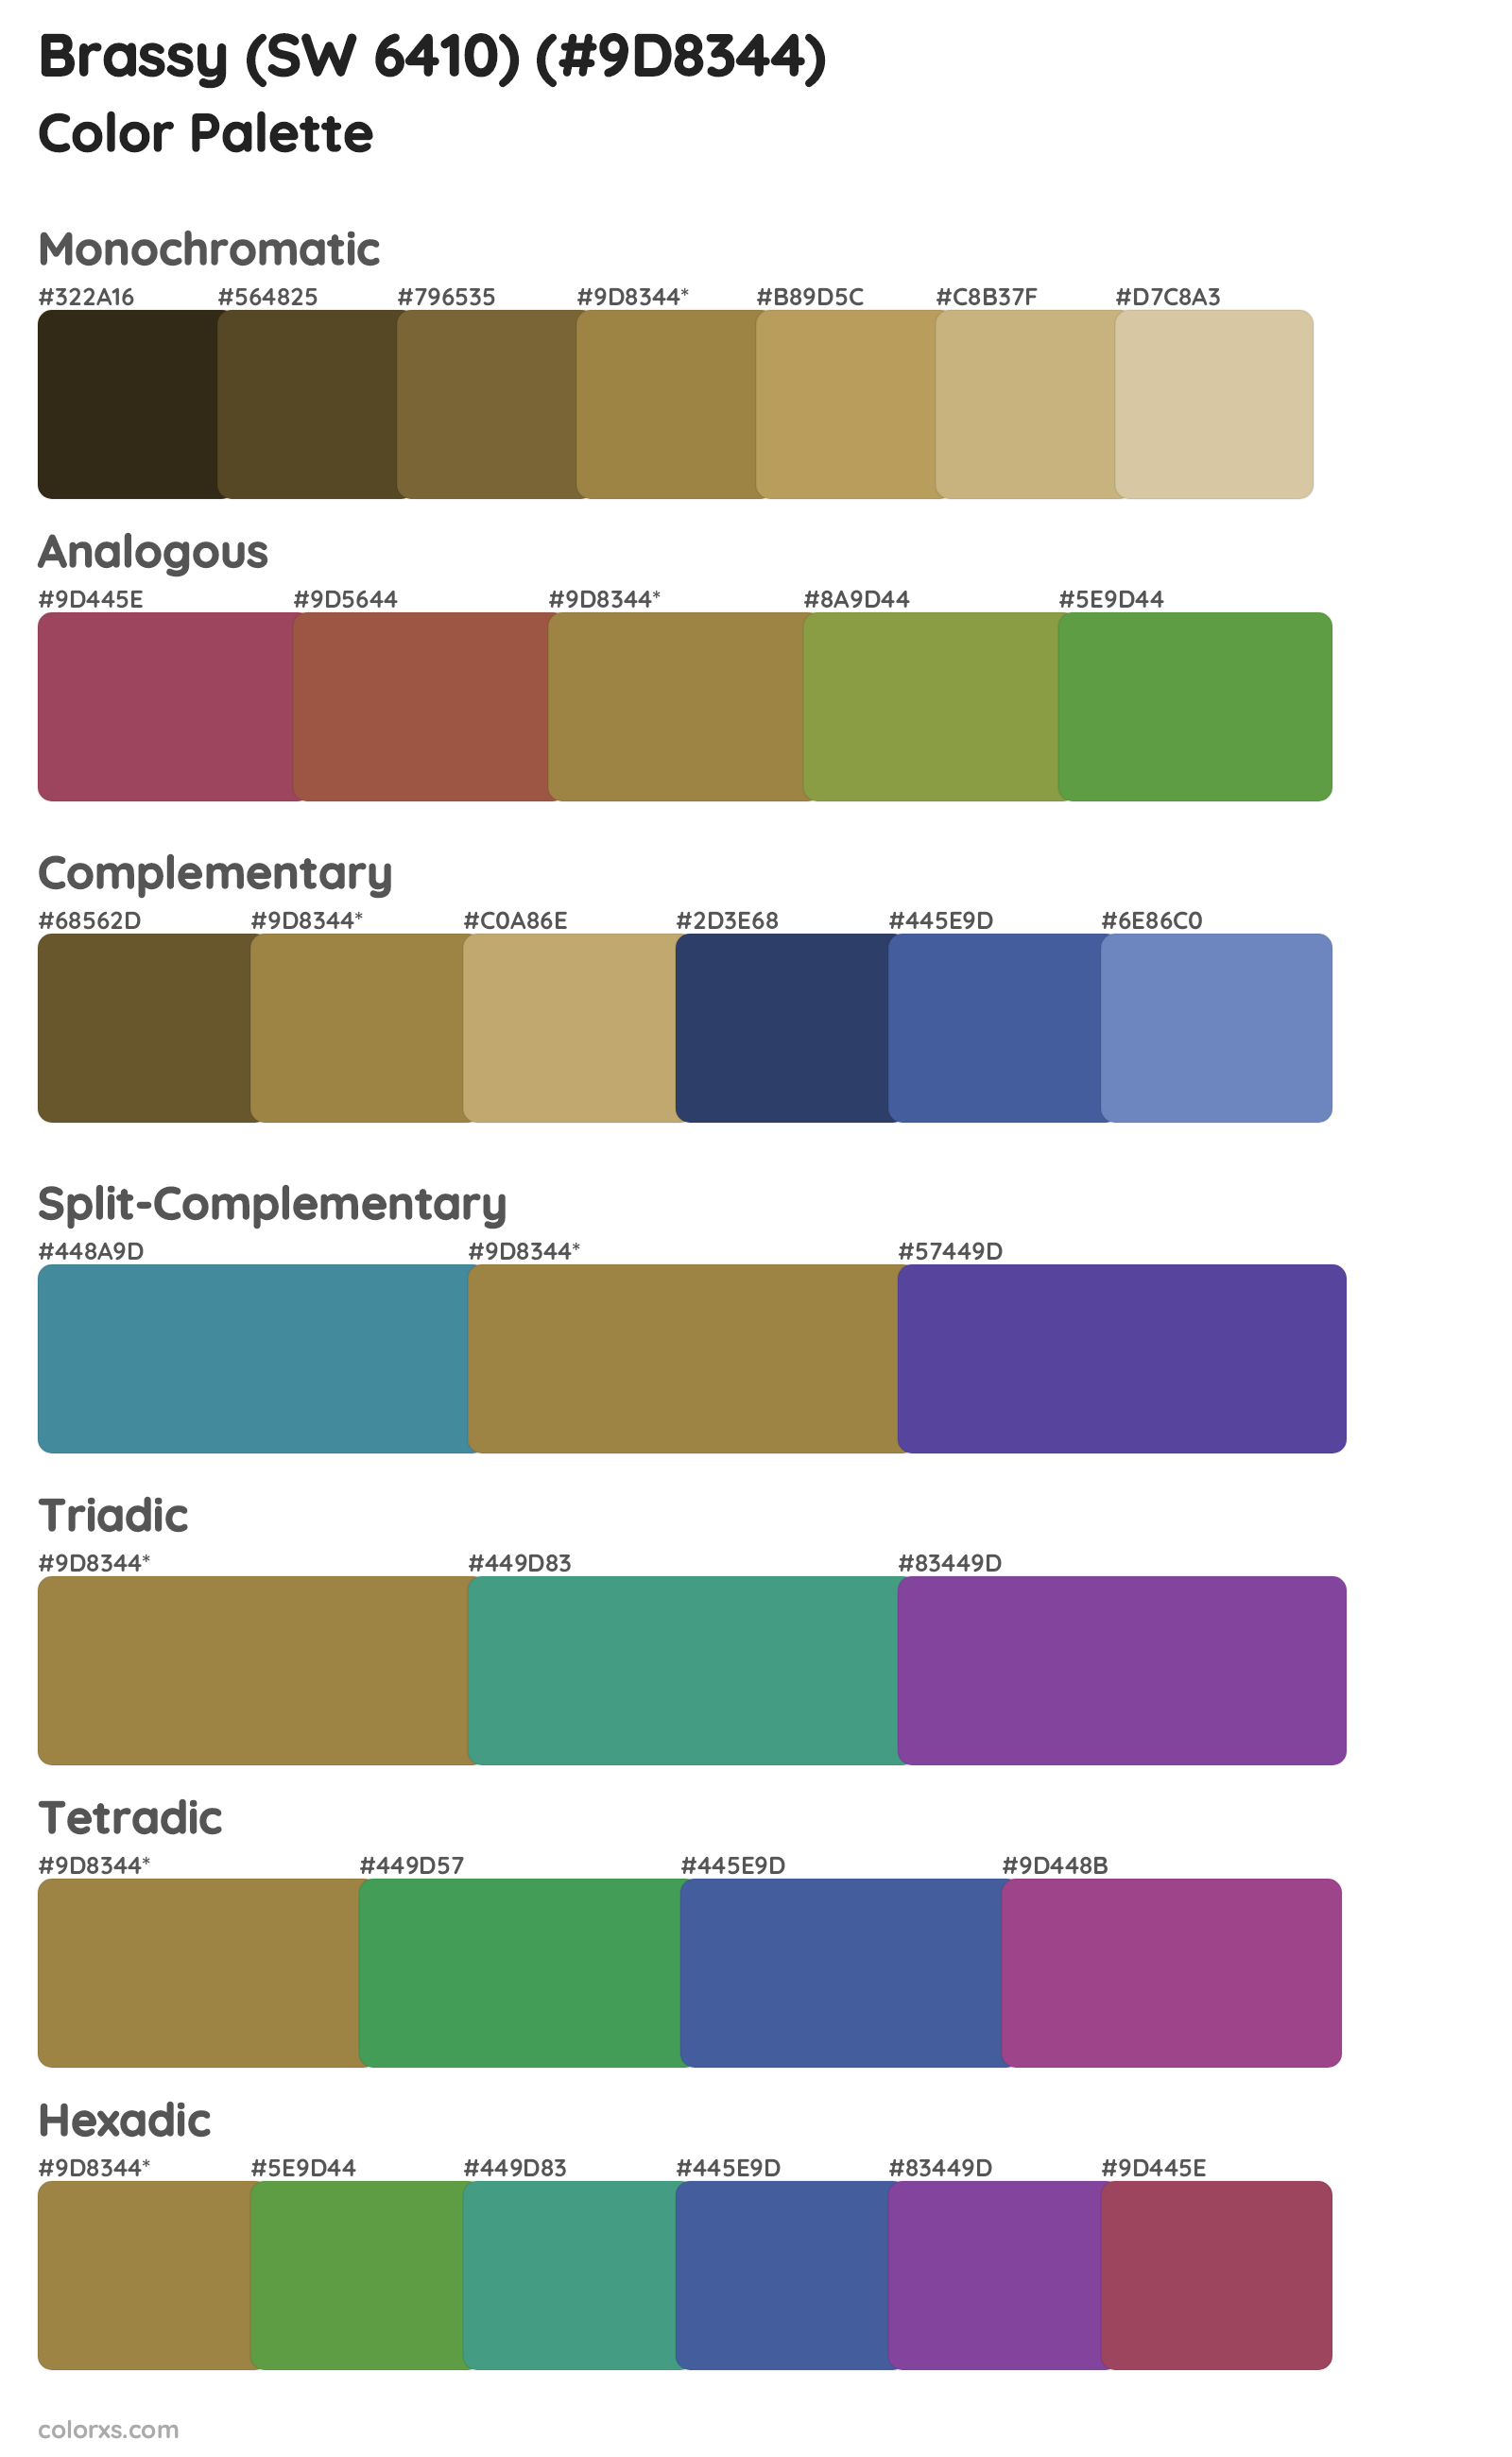 Brassy (SW 6410) Color Scheme Palettes